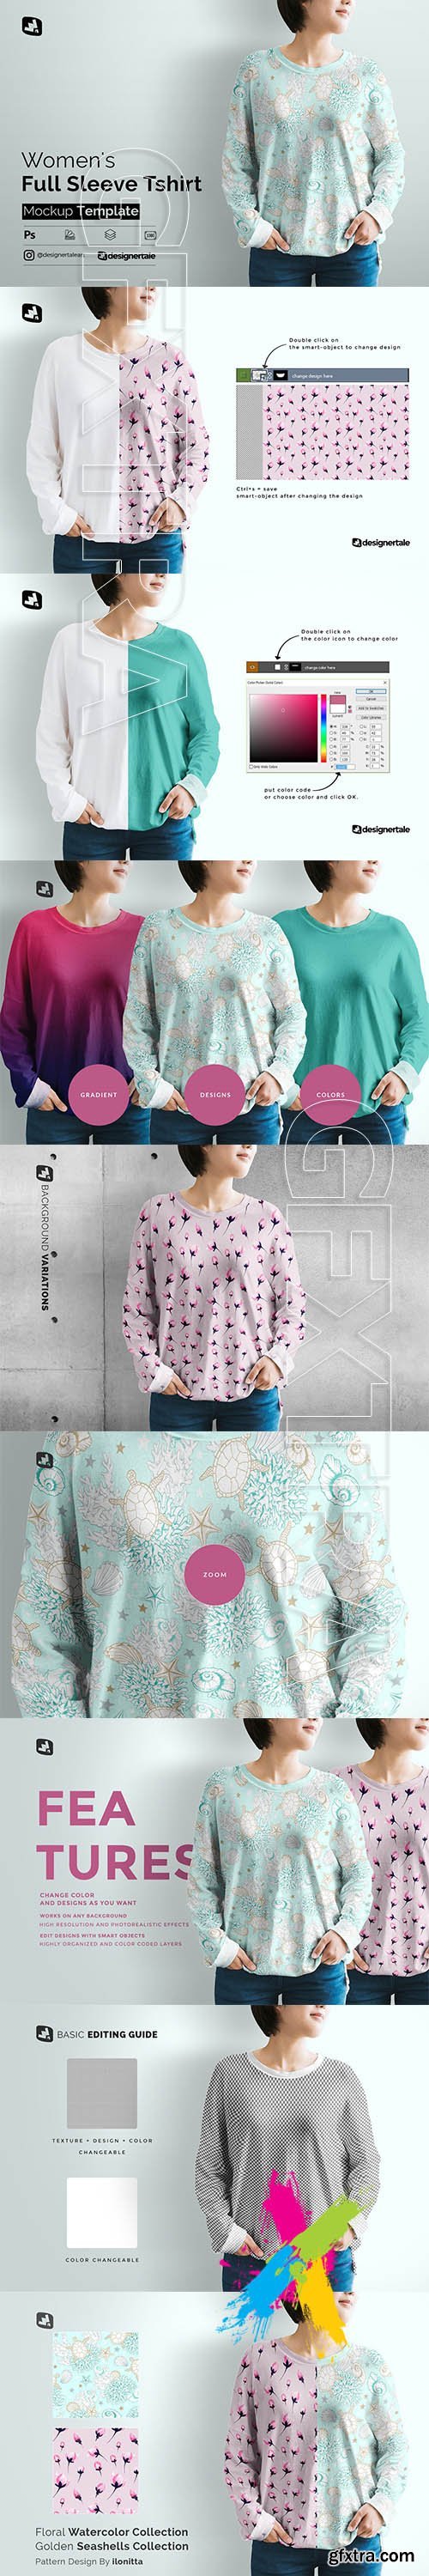 CreativeMarket - Women\'s Full Sleeve Tshirt Mockup 5316194